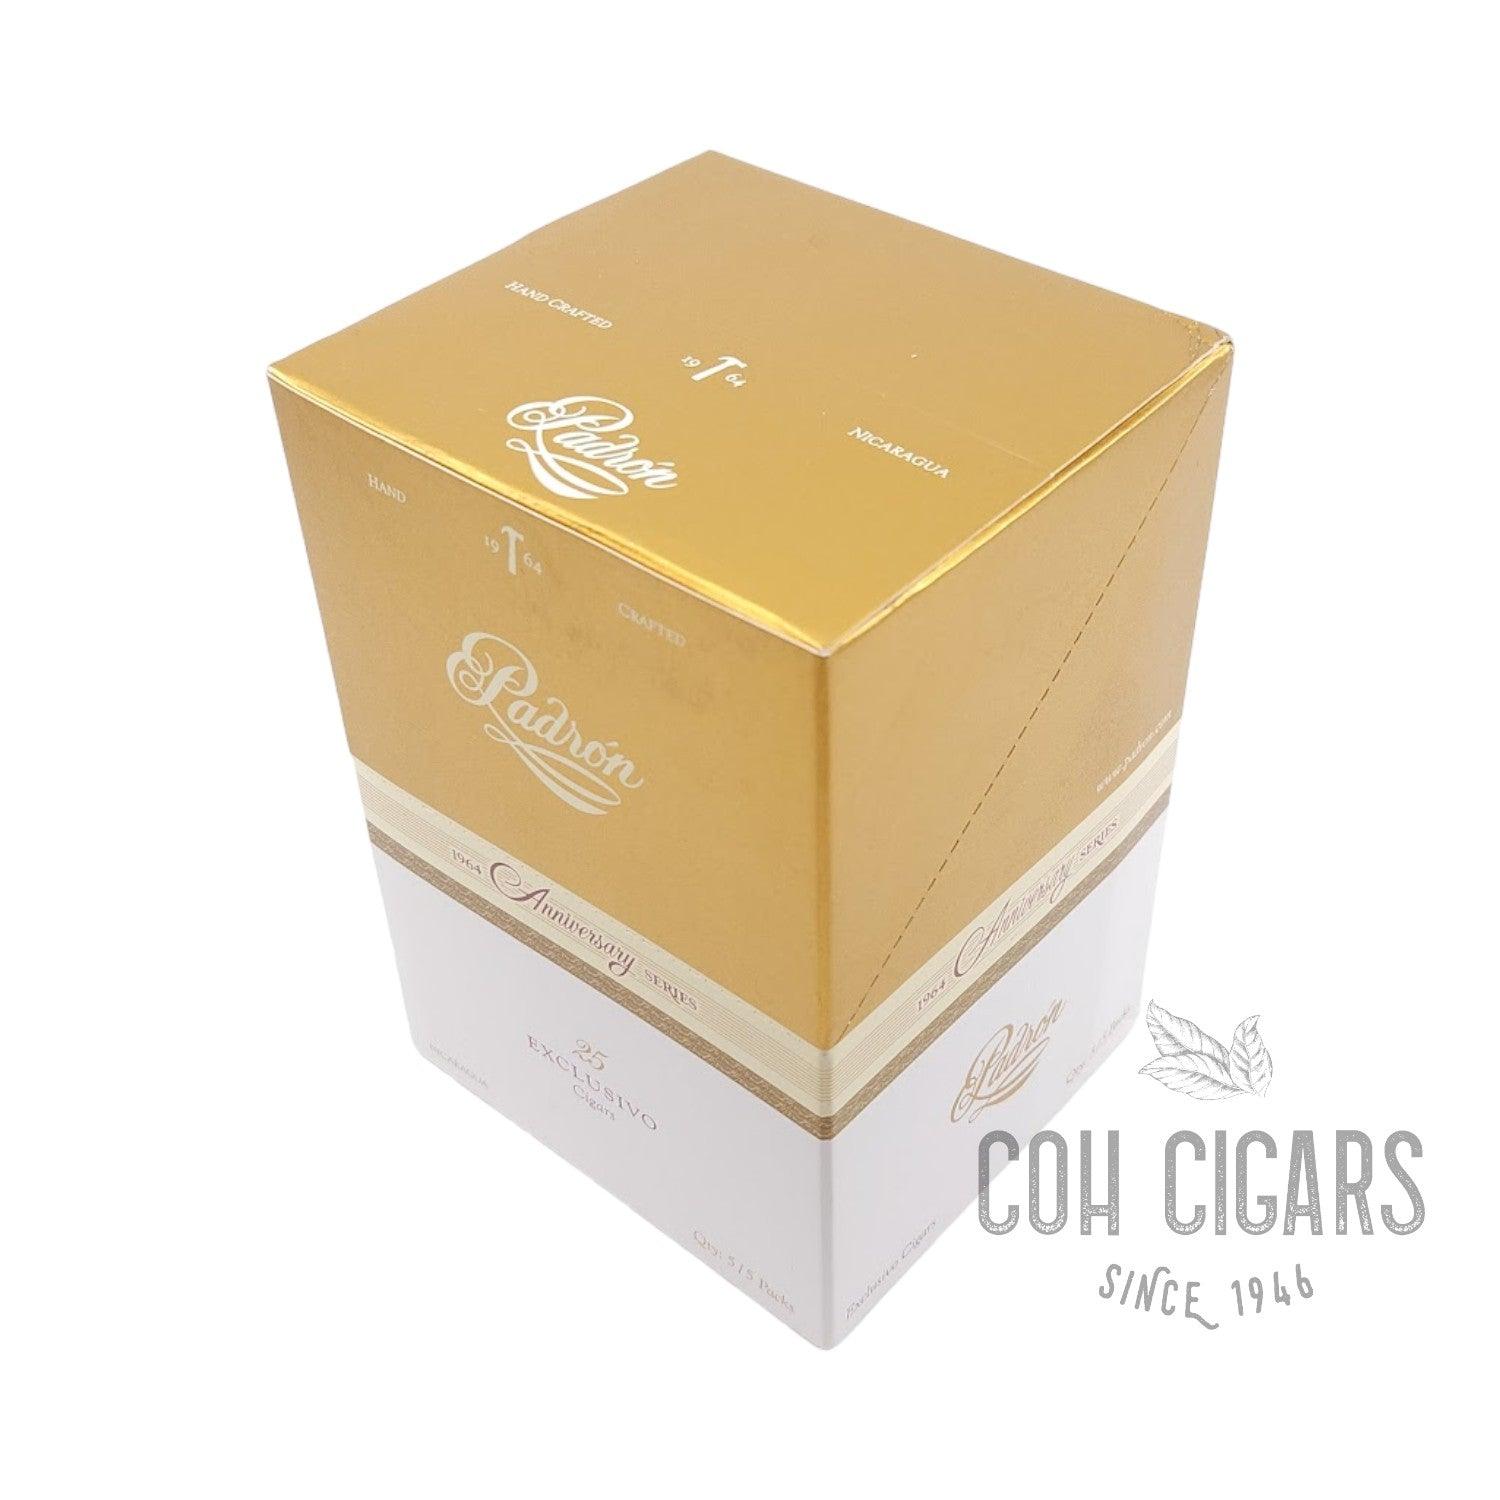 Padron Cigar | 1964 Anniversary Series Exclusivo Maduro | Box 5x5 - hk.cohcigars